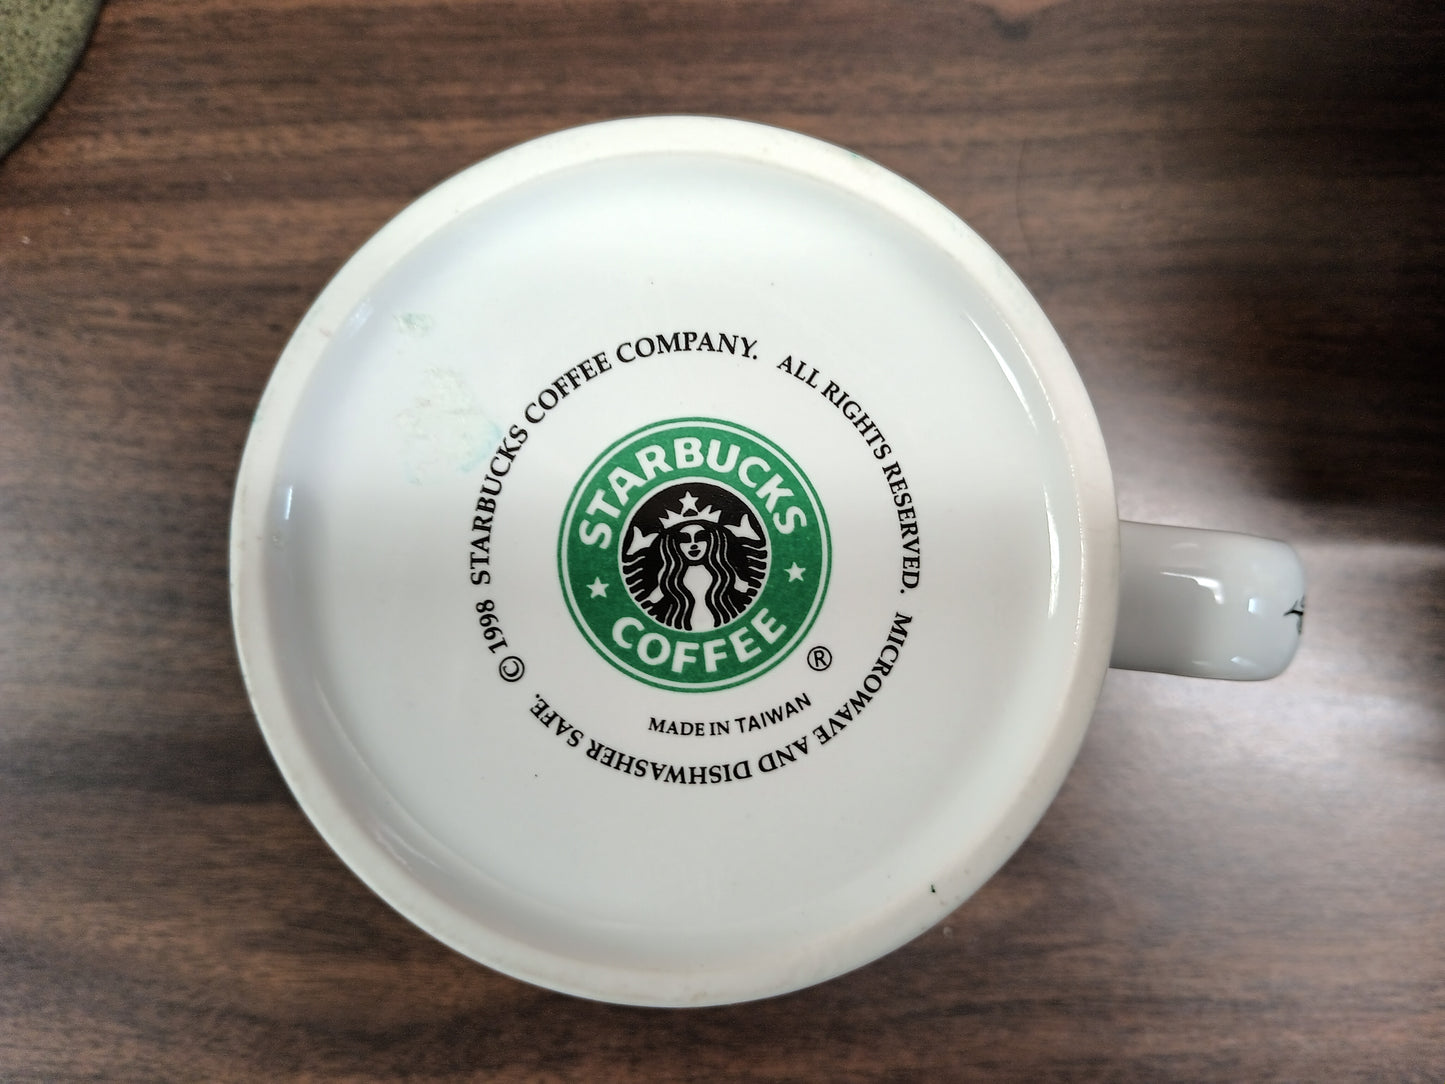 Starbucks Miami Mug